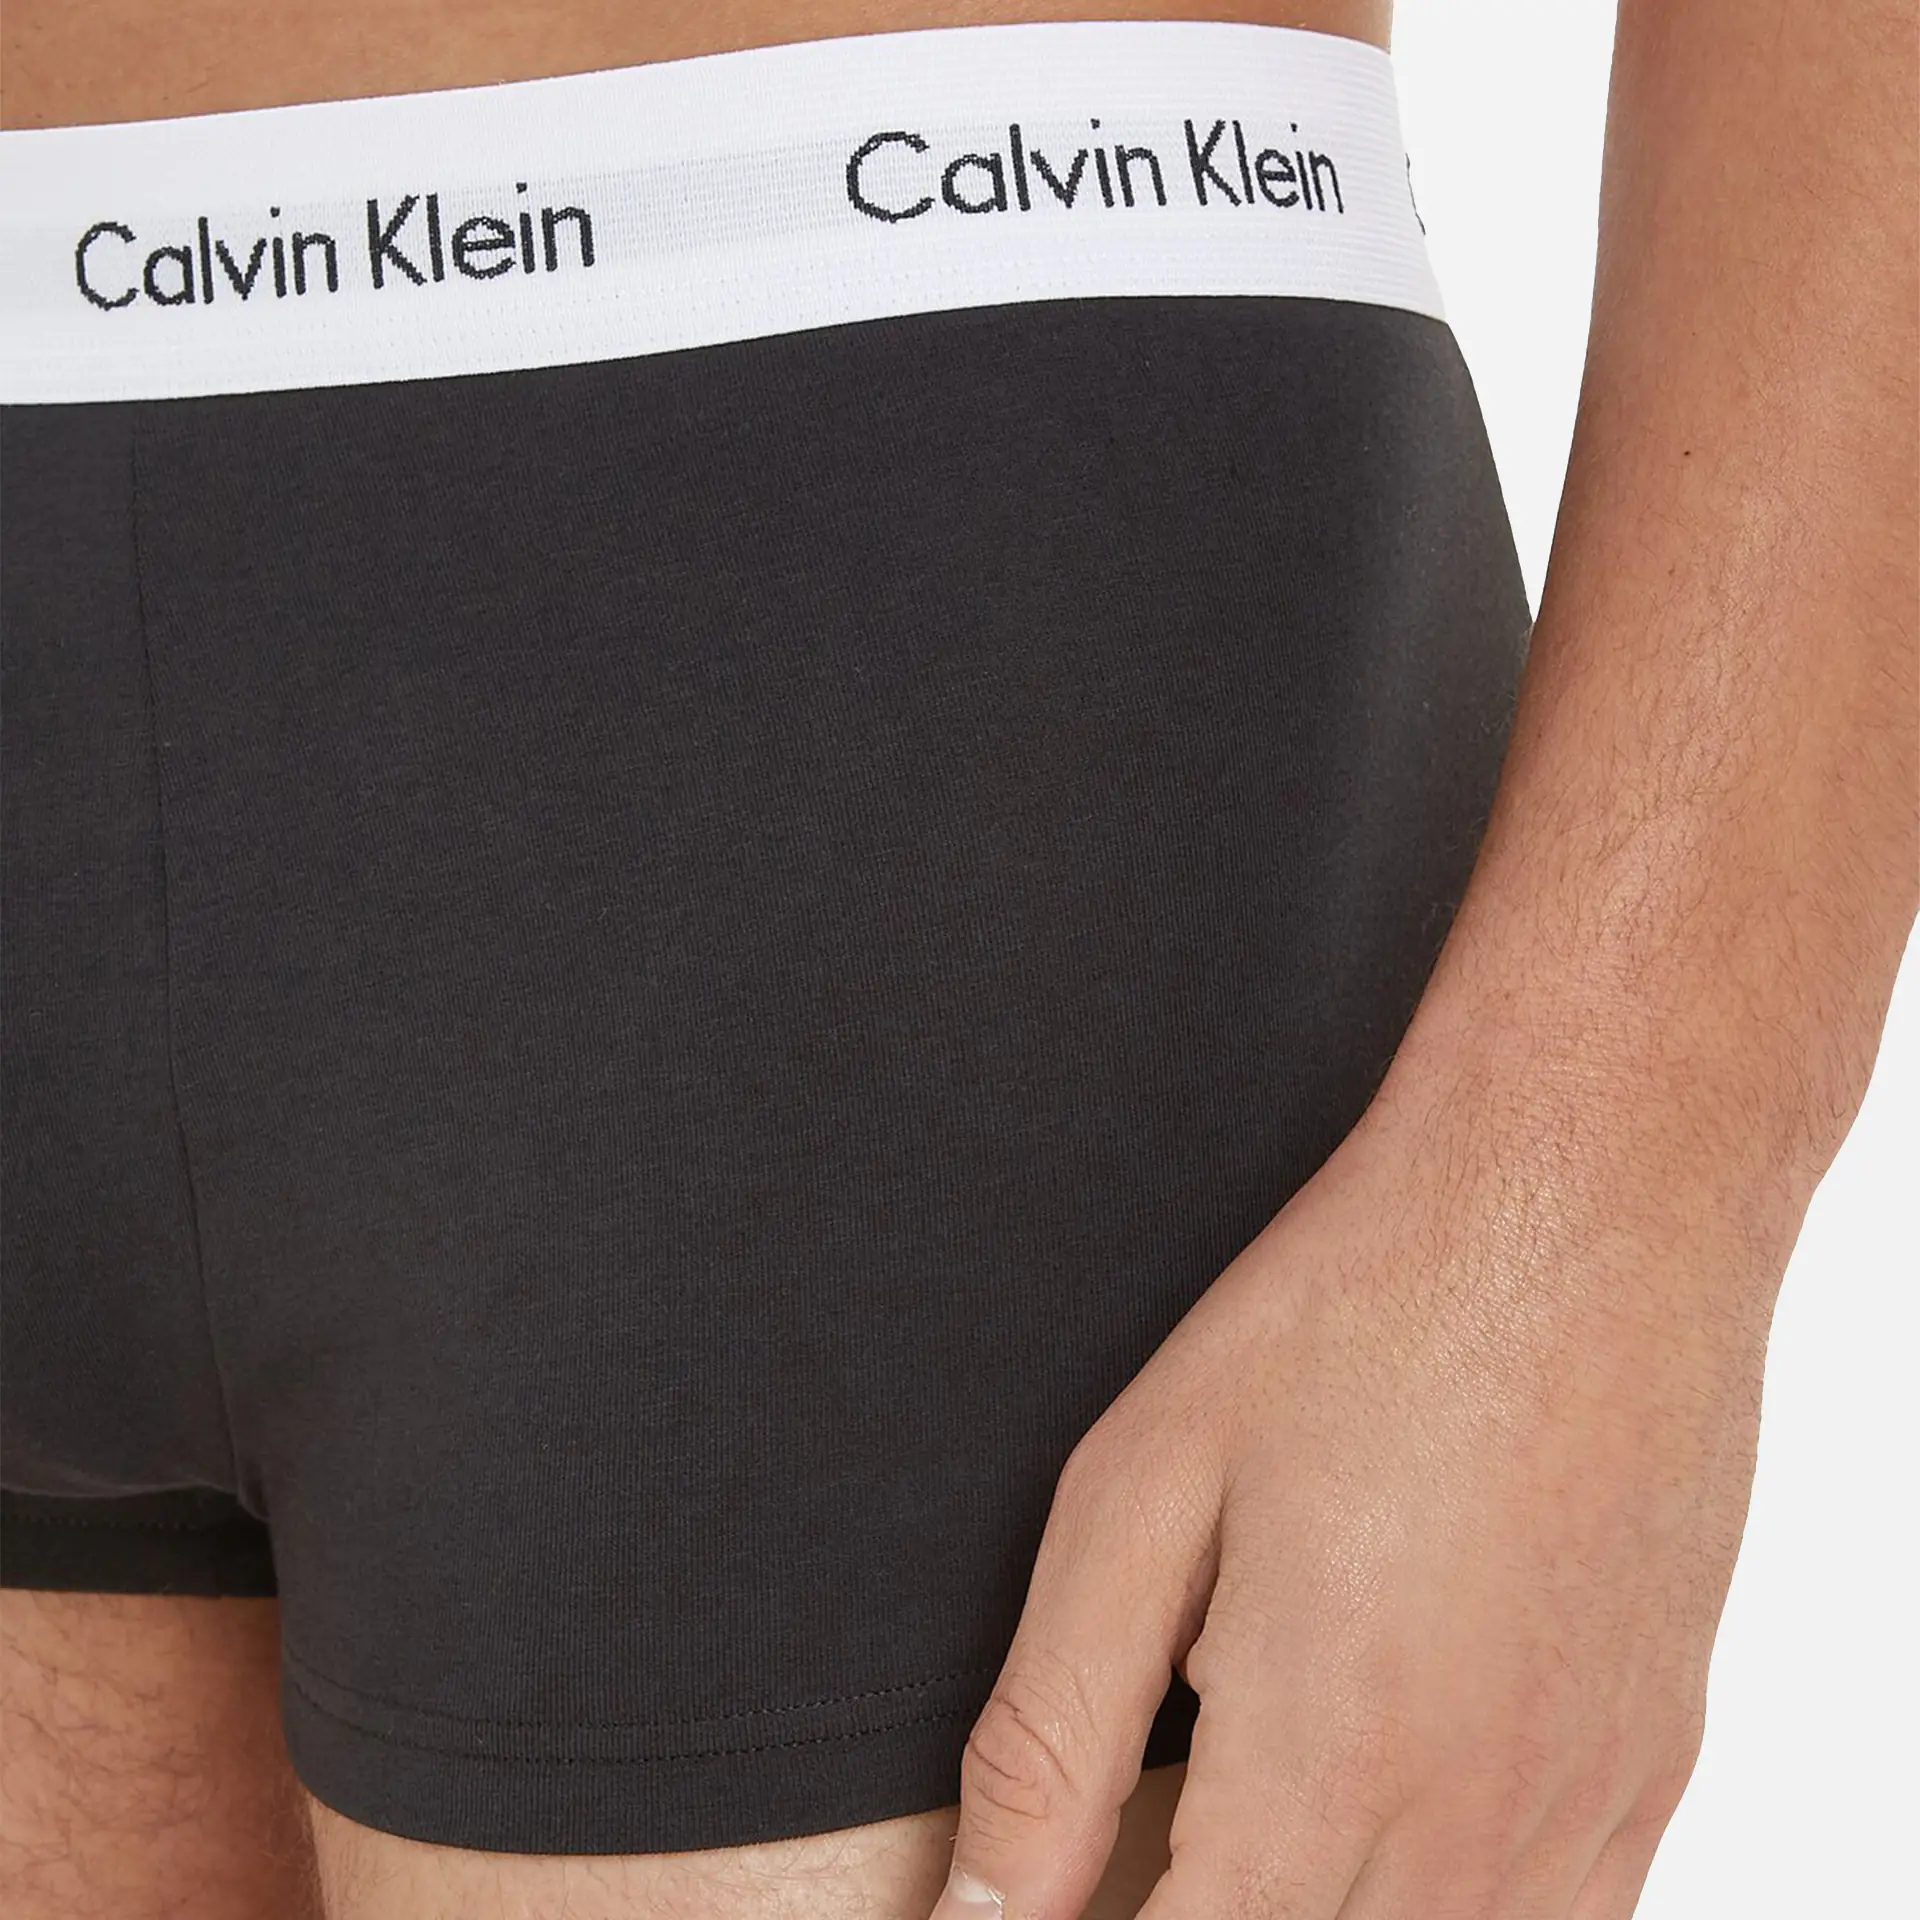 Calvin Klein 3Pack Low Rise Trunk Black